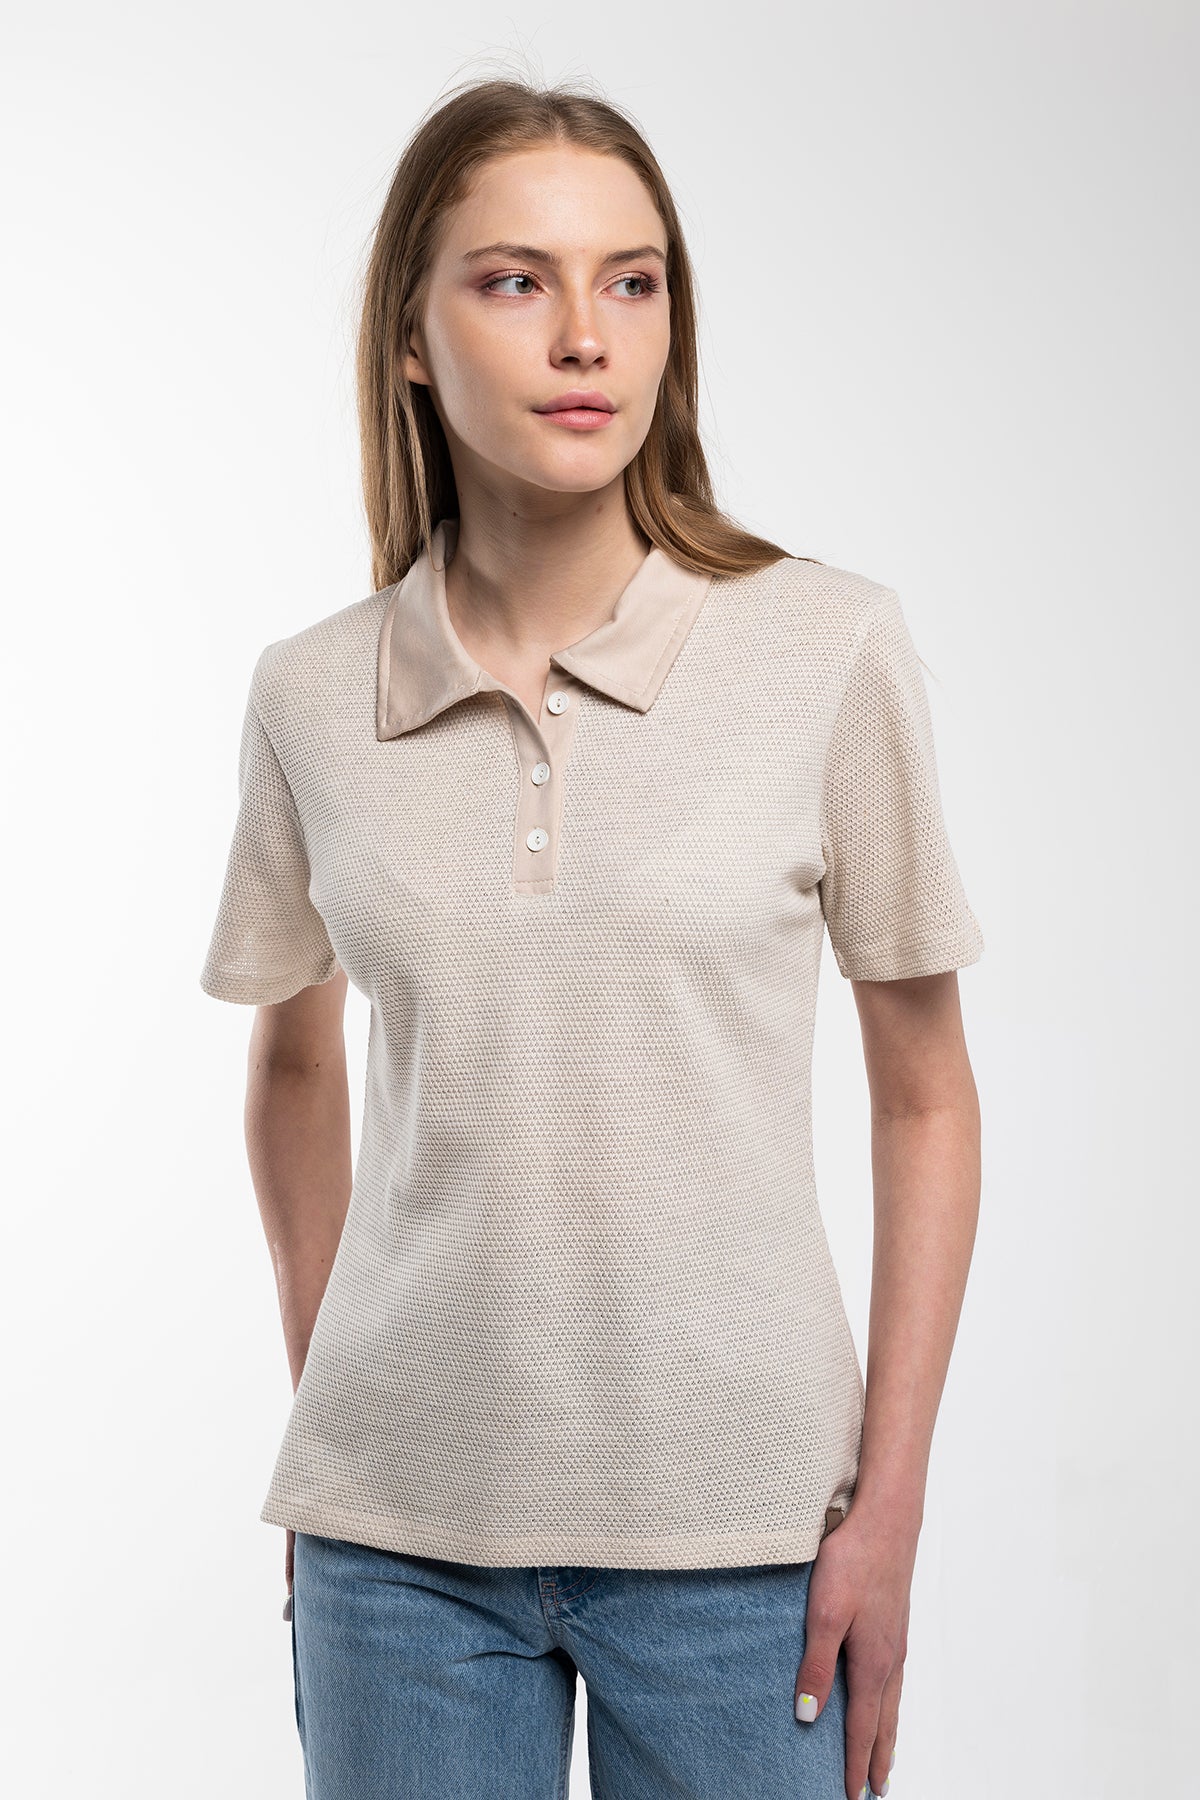 Hyipels Women's Crop Top Polo Shirts,Summer Collor Female T-Shirt